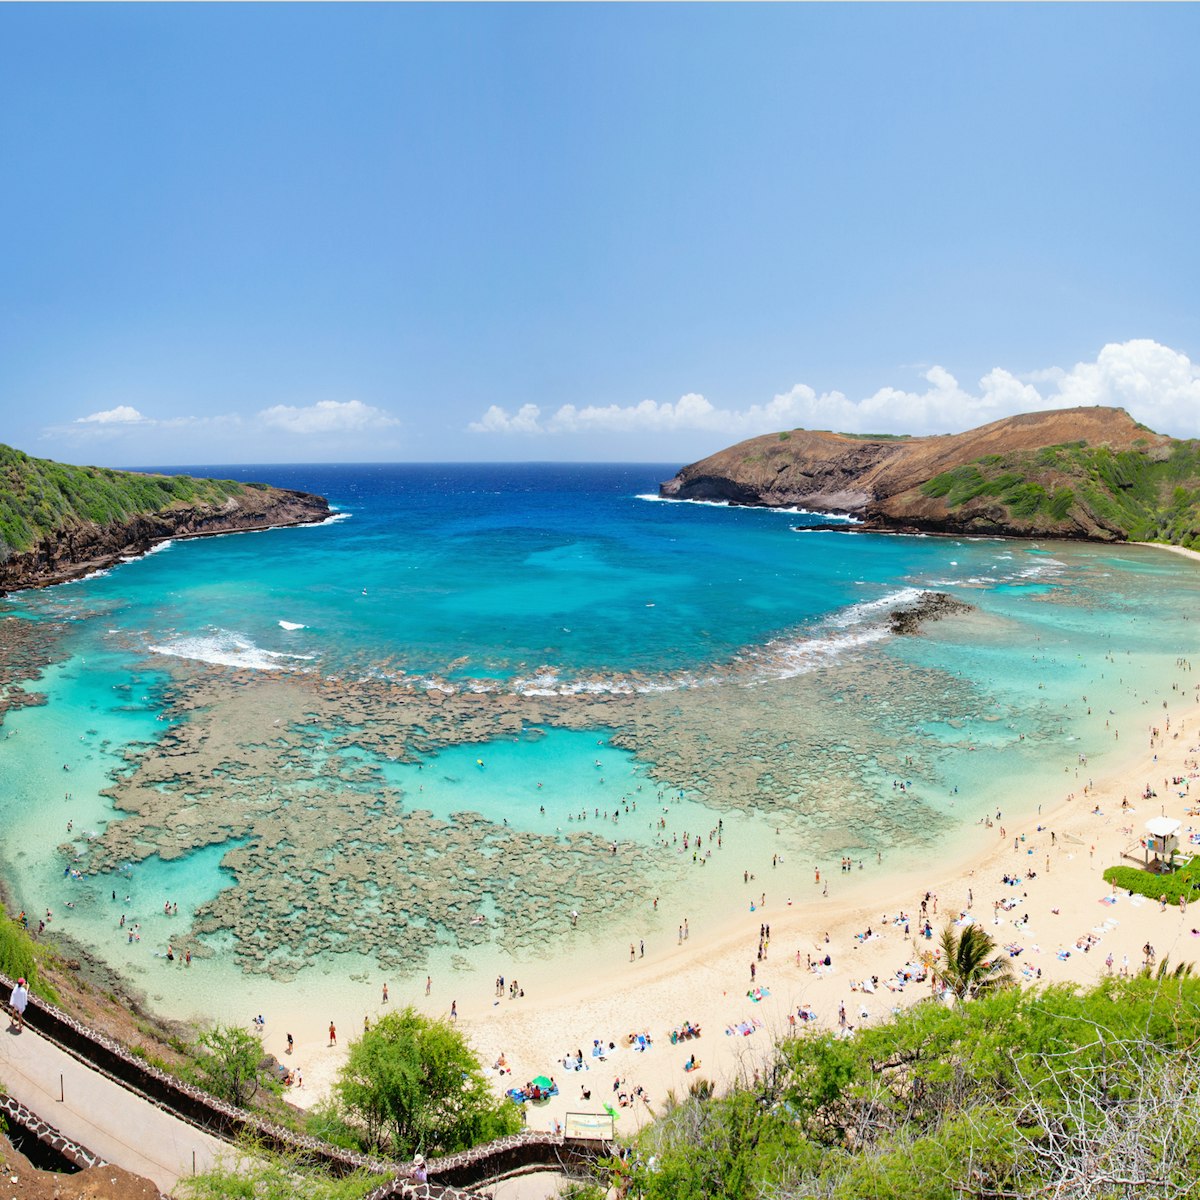 Popular snorkel beach Hanauma bay on island of Oahu, Hawaii, USA.
144119988